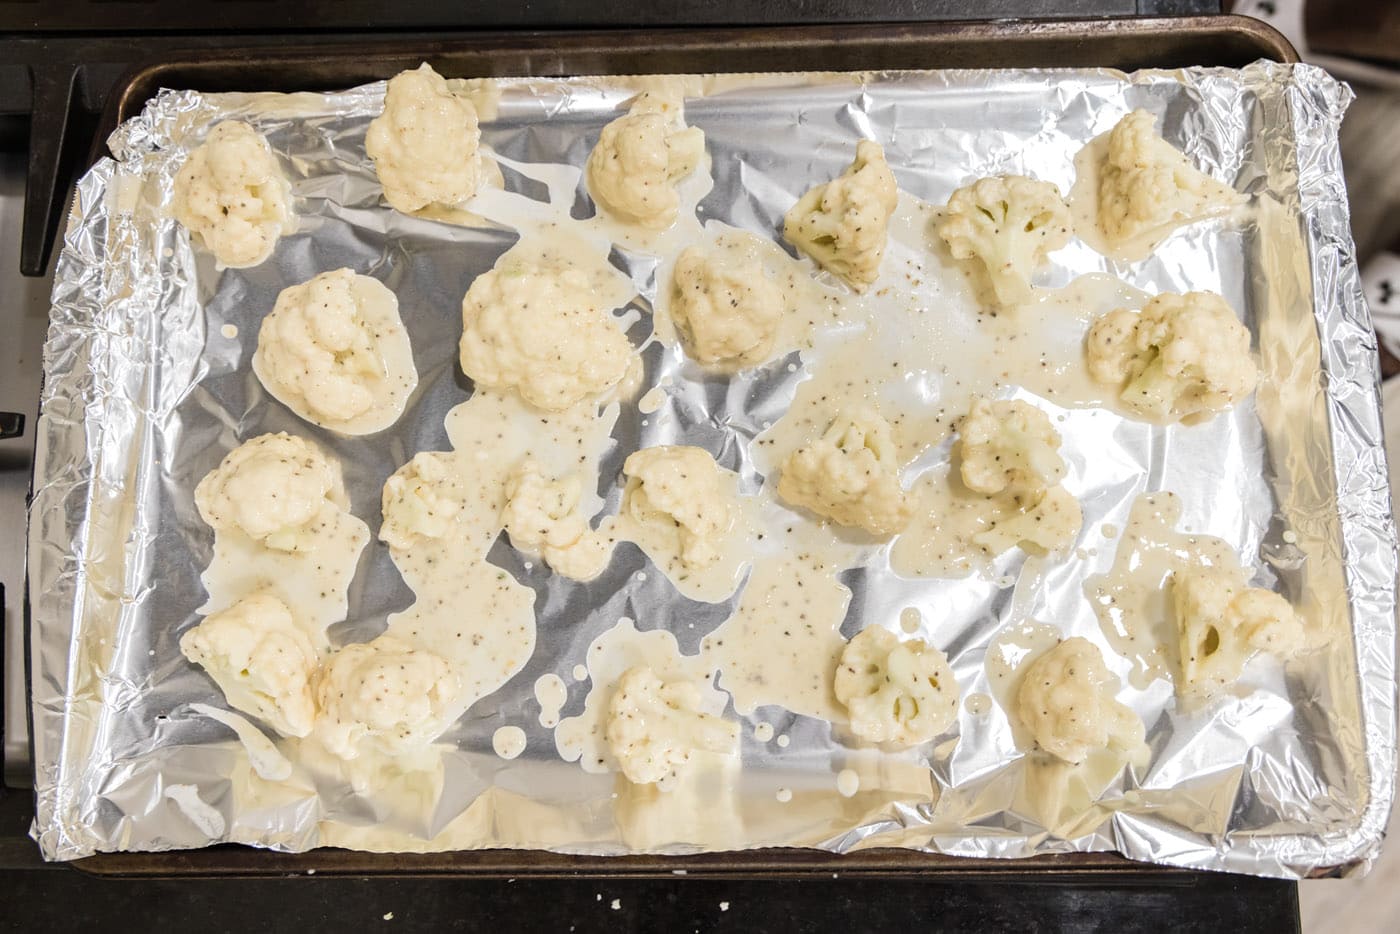 cauliflower dredged in flour coating